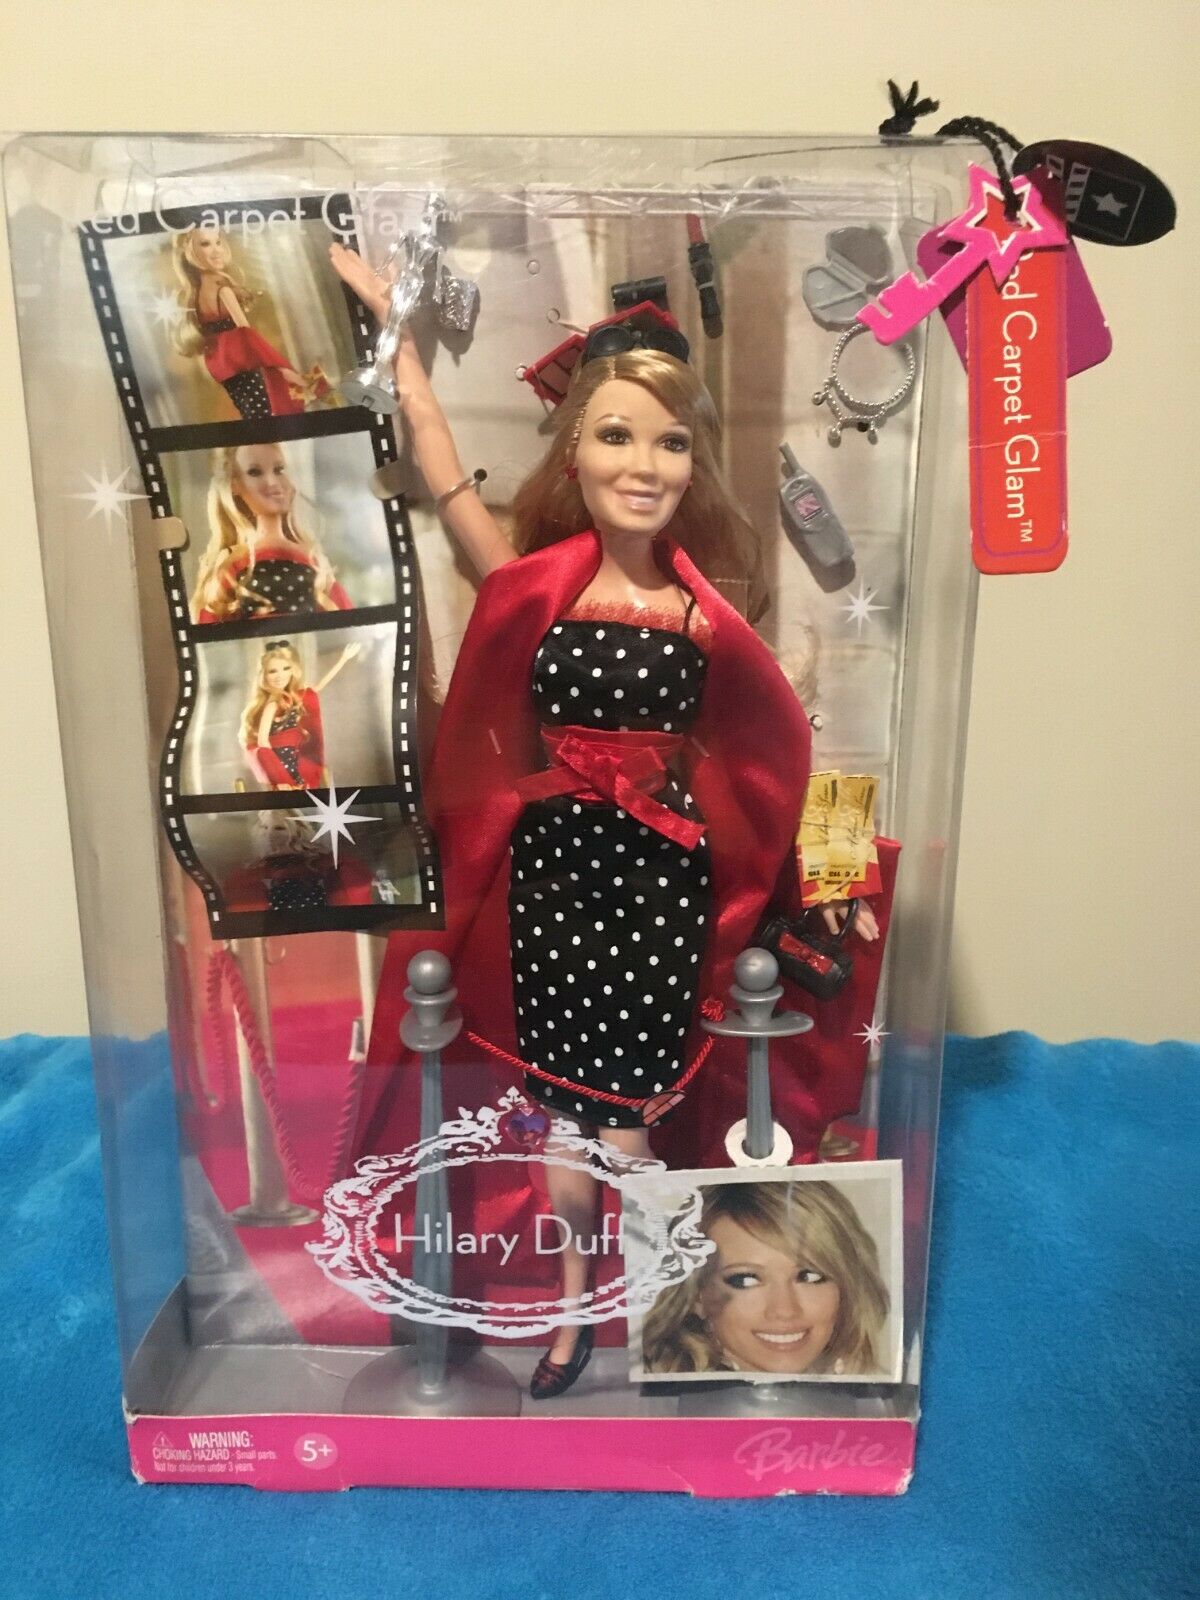 Red Carpet Glam Hilary Duff Barbie 2006 Mattel - Nib